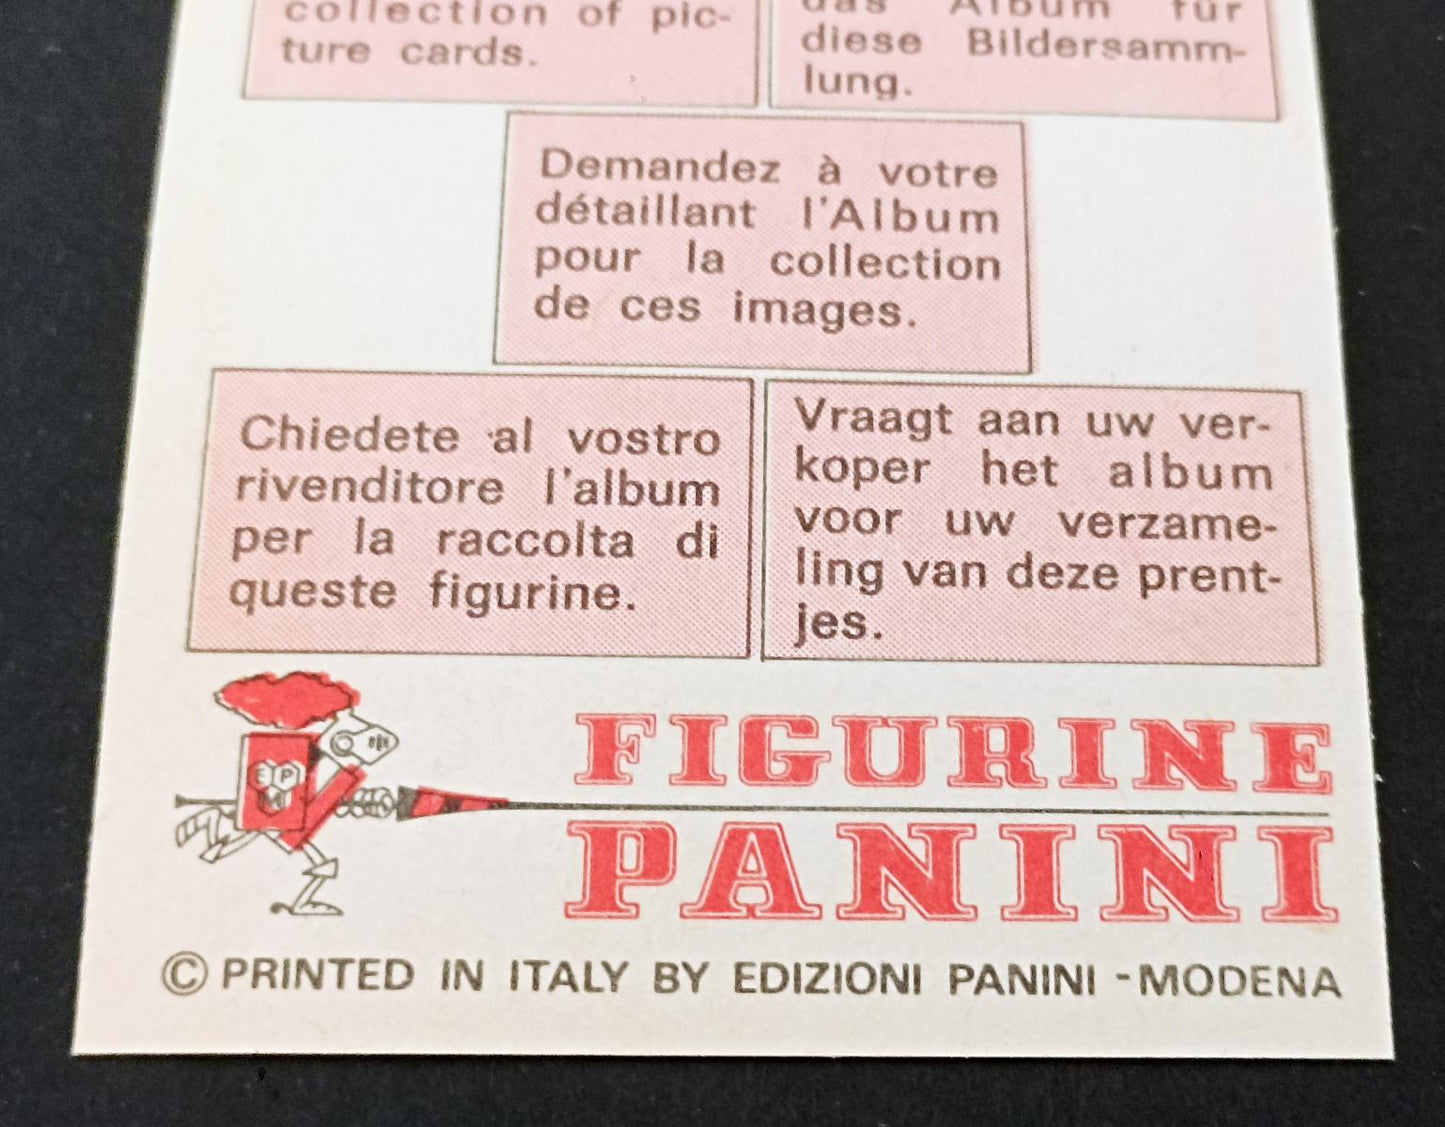 ATHLETICS CARD - PANINI - MONTREAL 1976 - WILMA RUDOLPH  - #80 - MINT